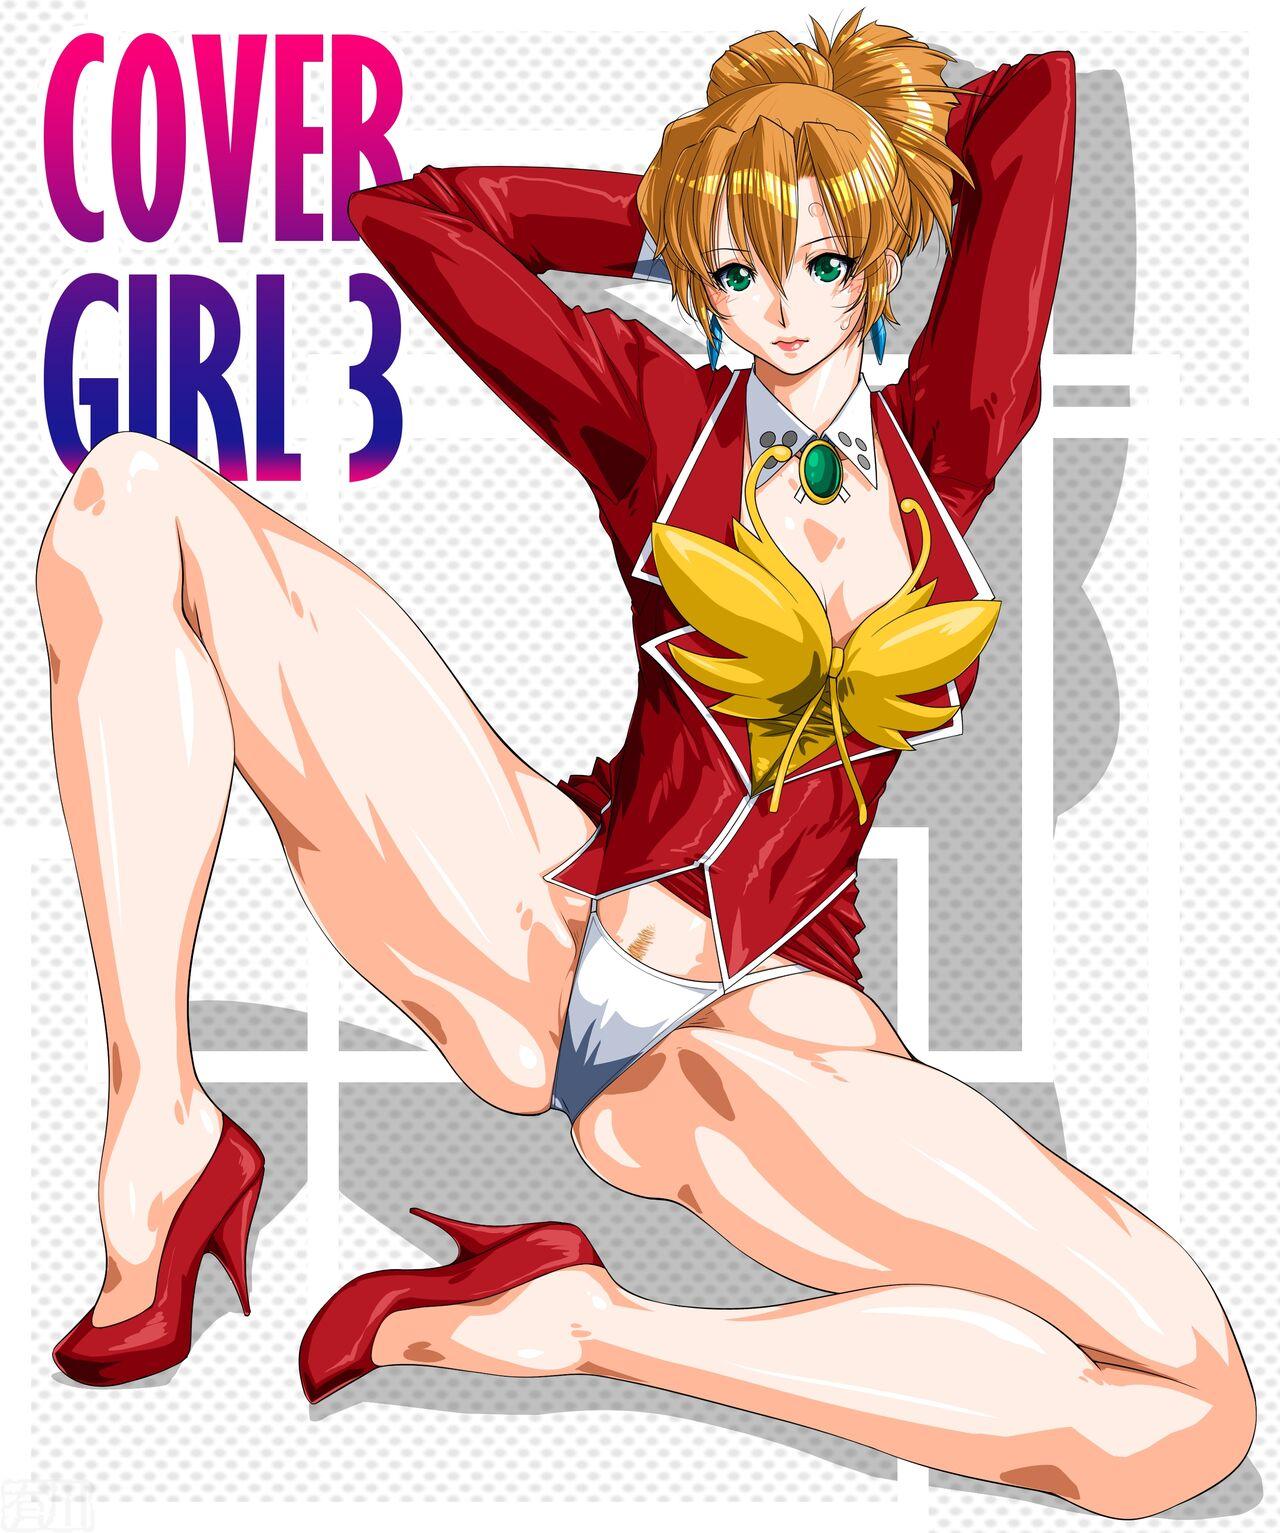 COVER GIRL 3 22